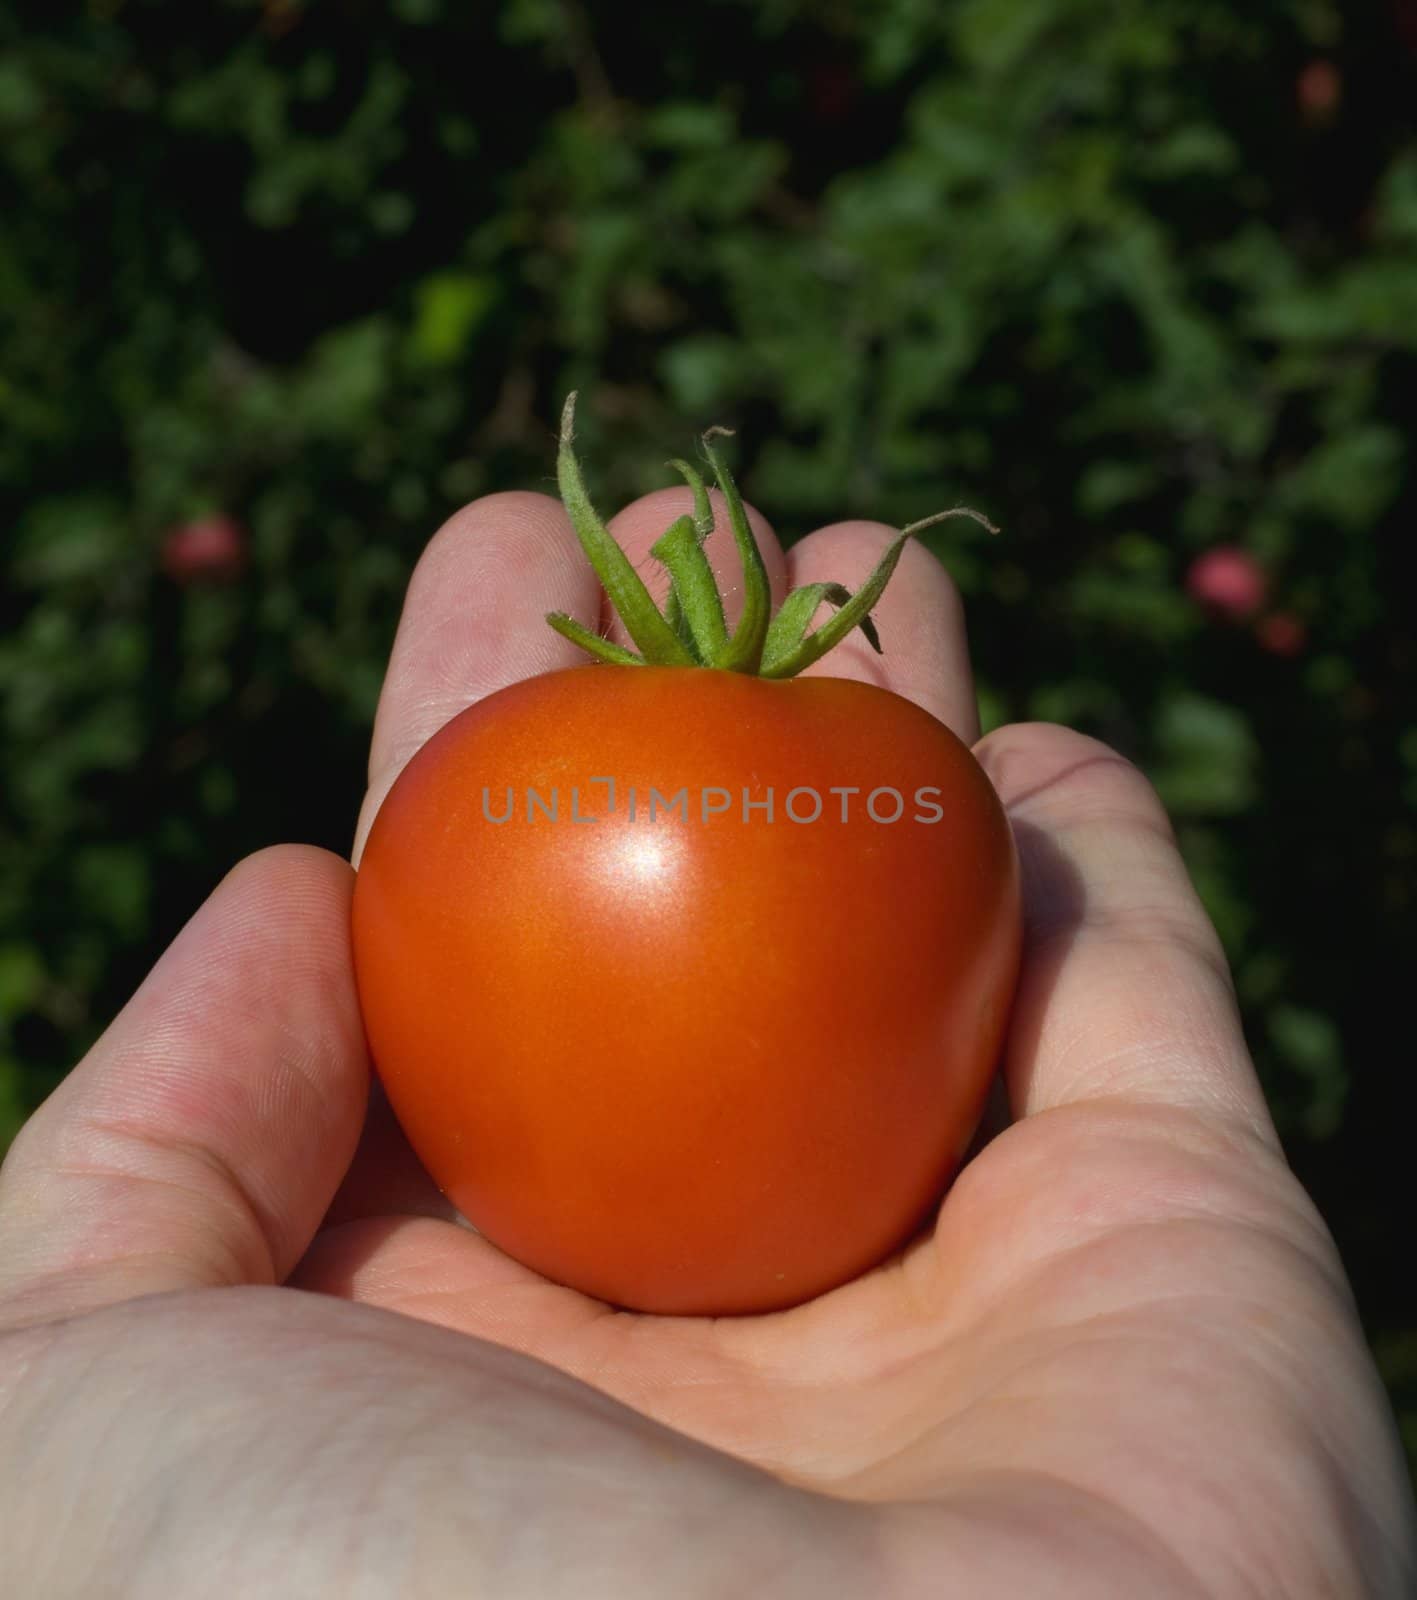 The gardener offers a ripe tomato by mafffutochka